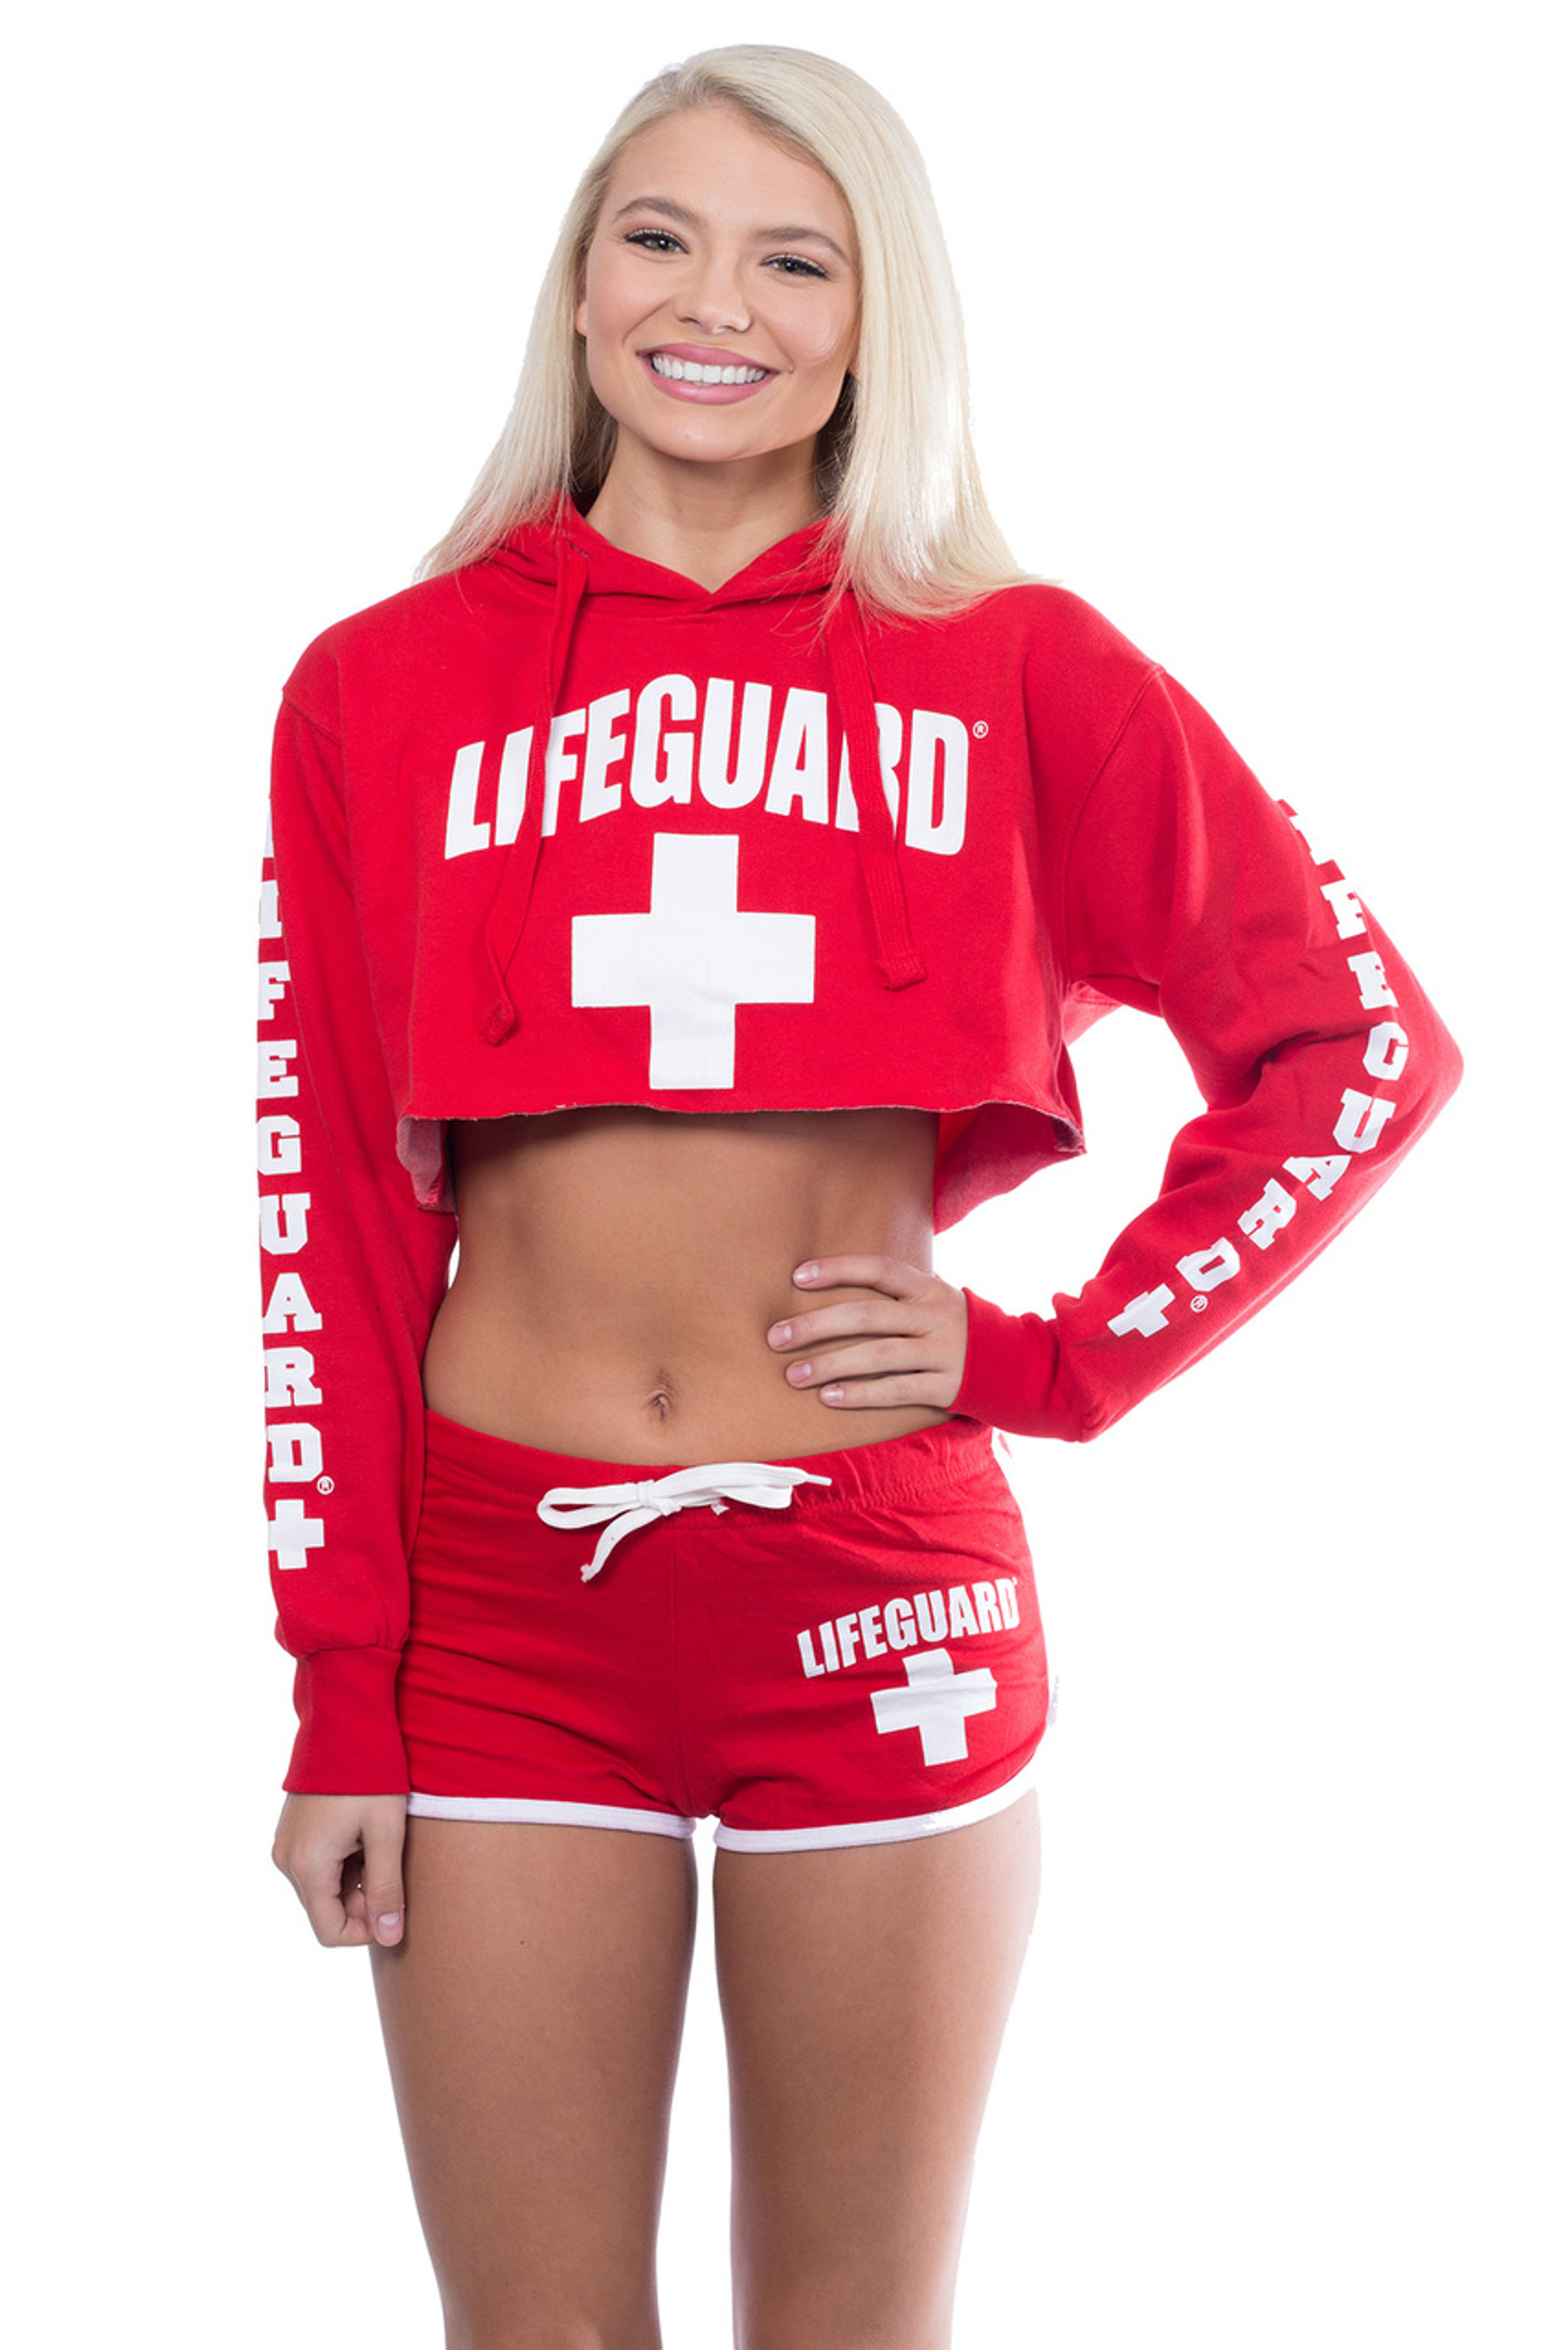 Lifeguard Sweatshirts Female Swim Suits Ladies Shorts Women Bathingsuits